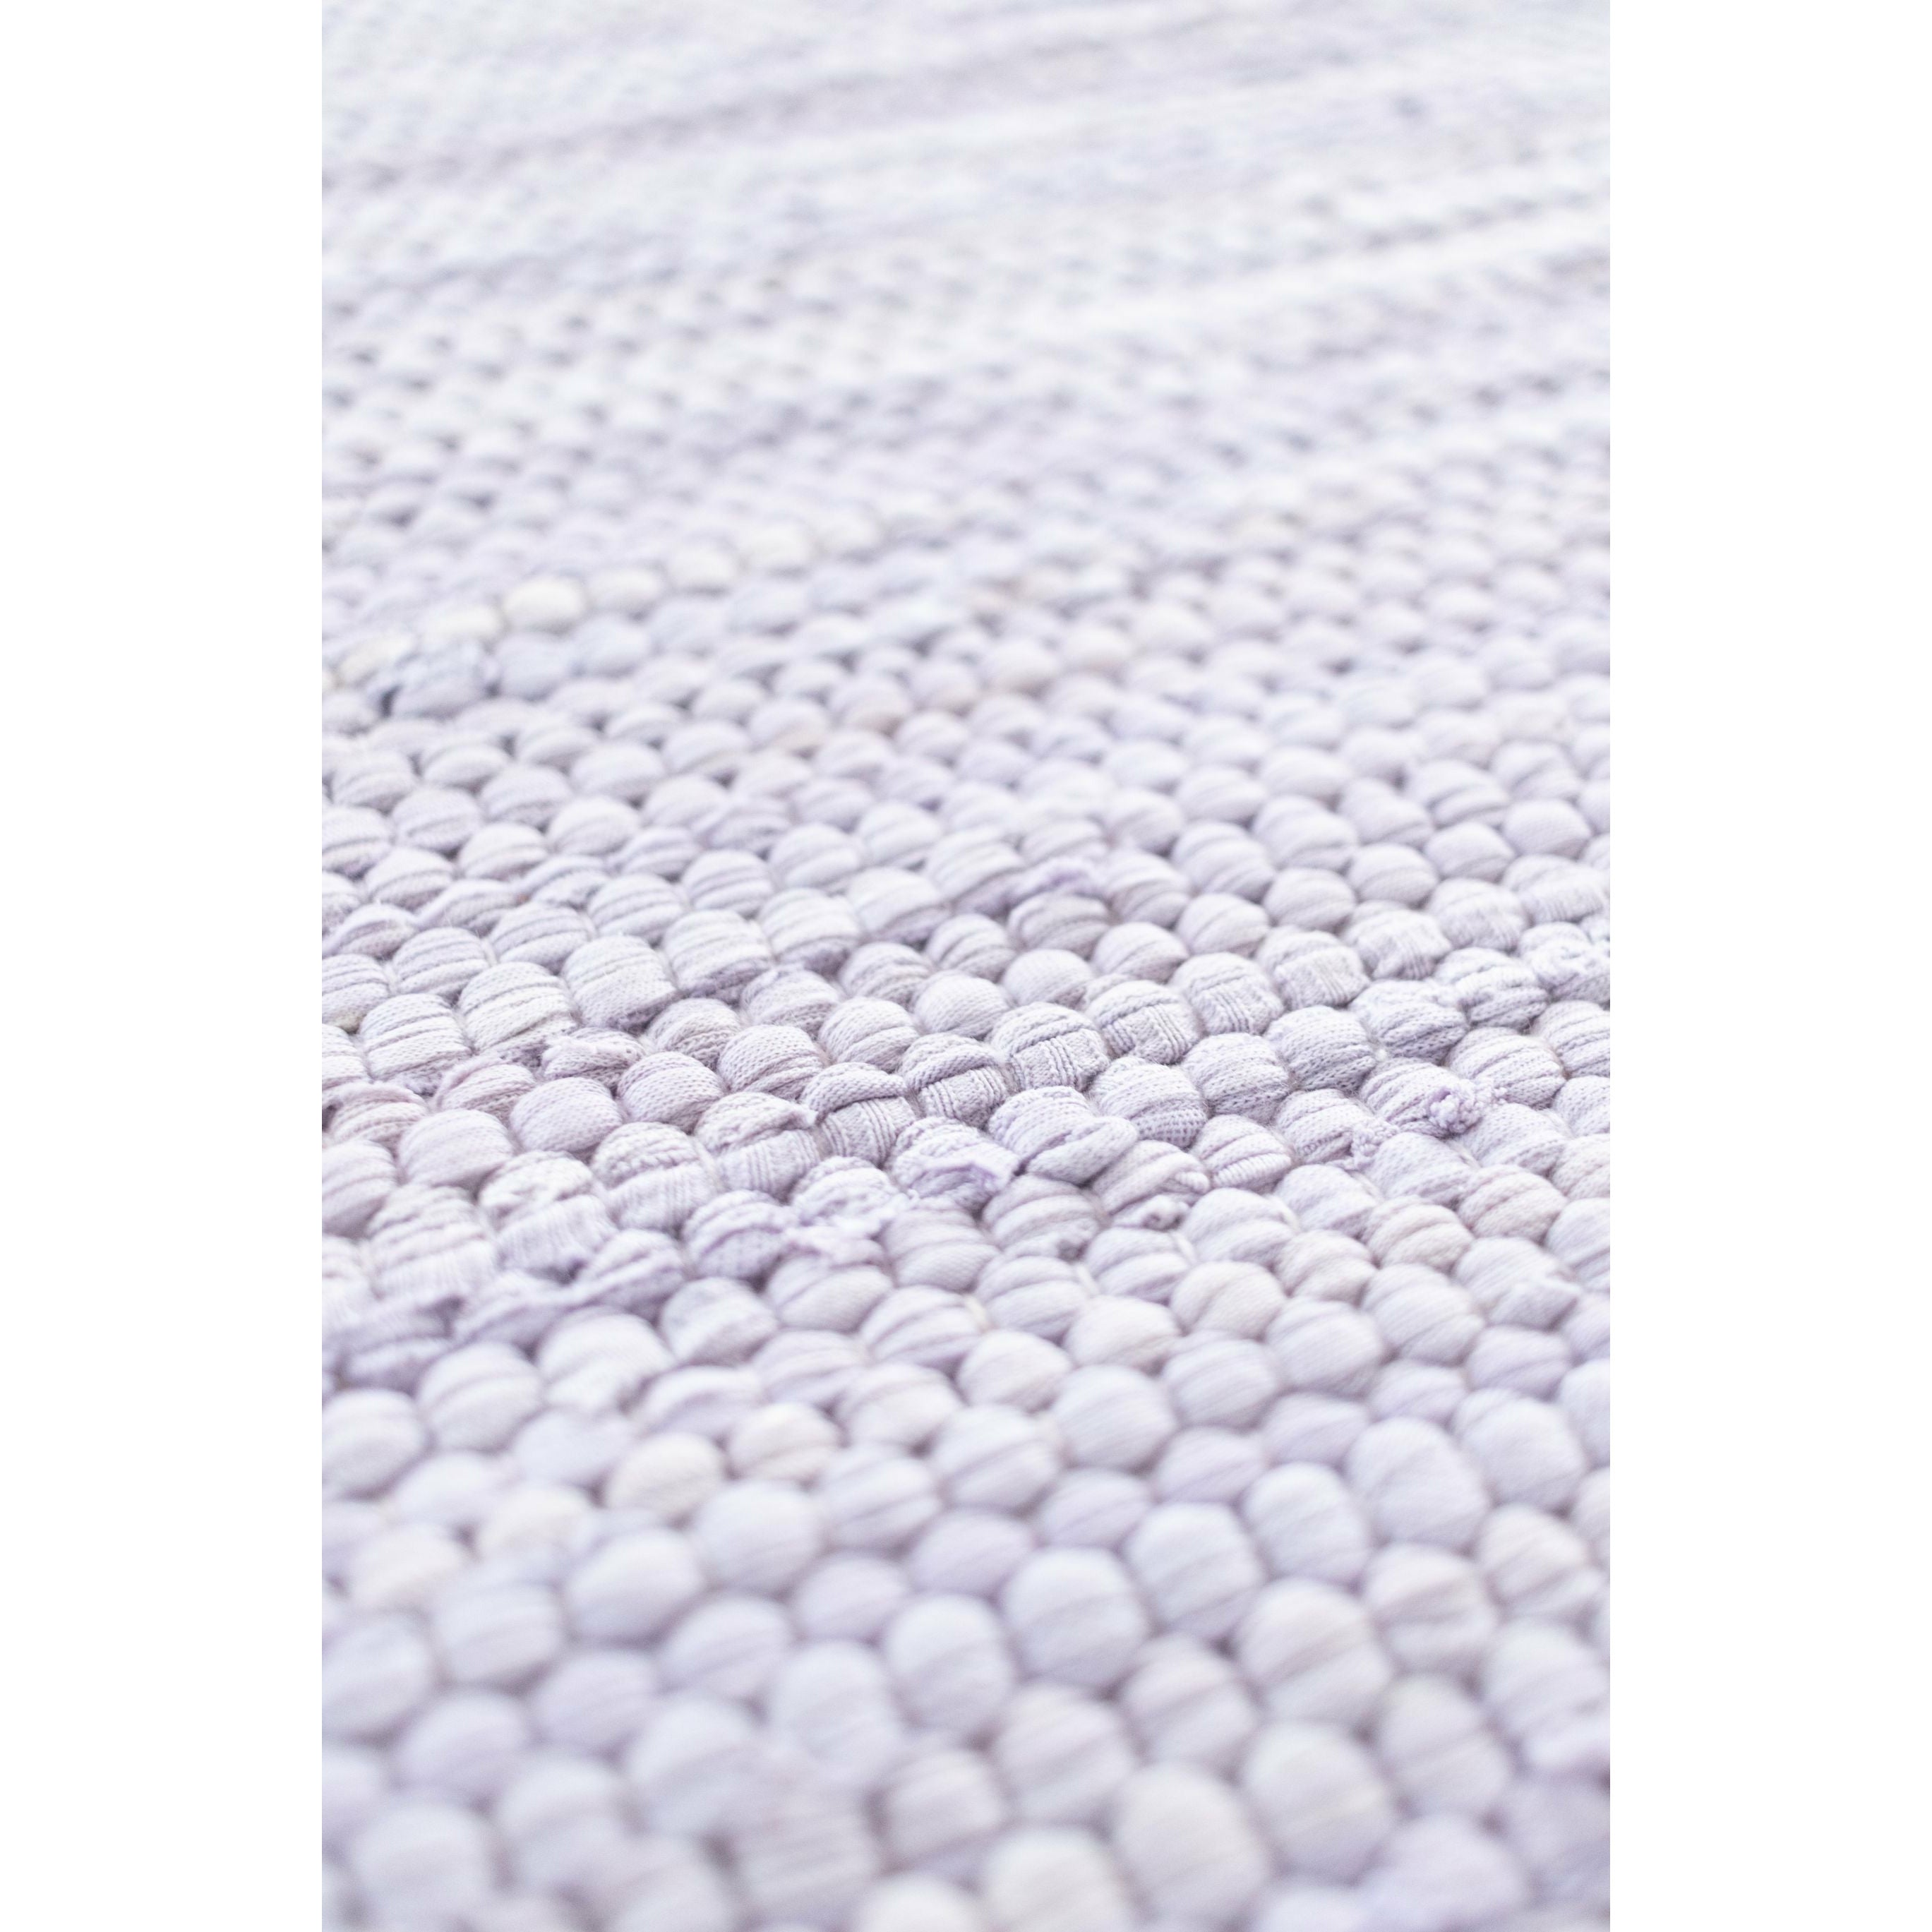 Rug Solid Cotton Tæppe 240x170 Cm, Lavender